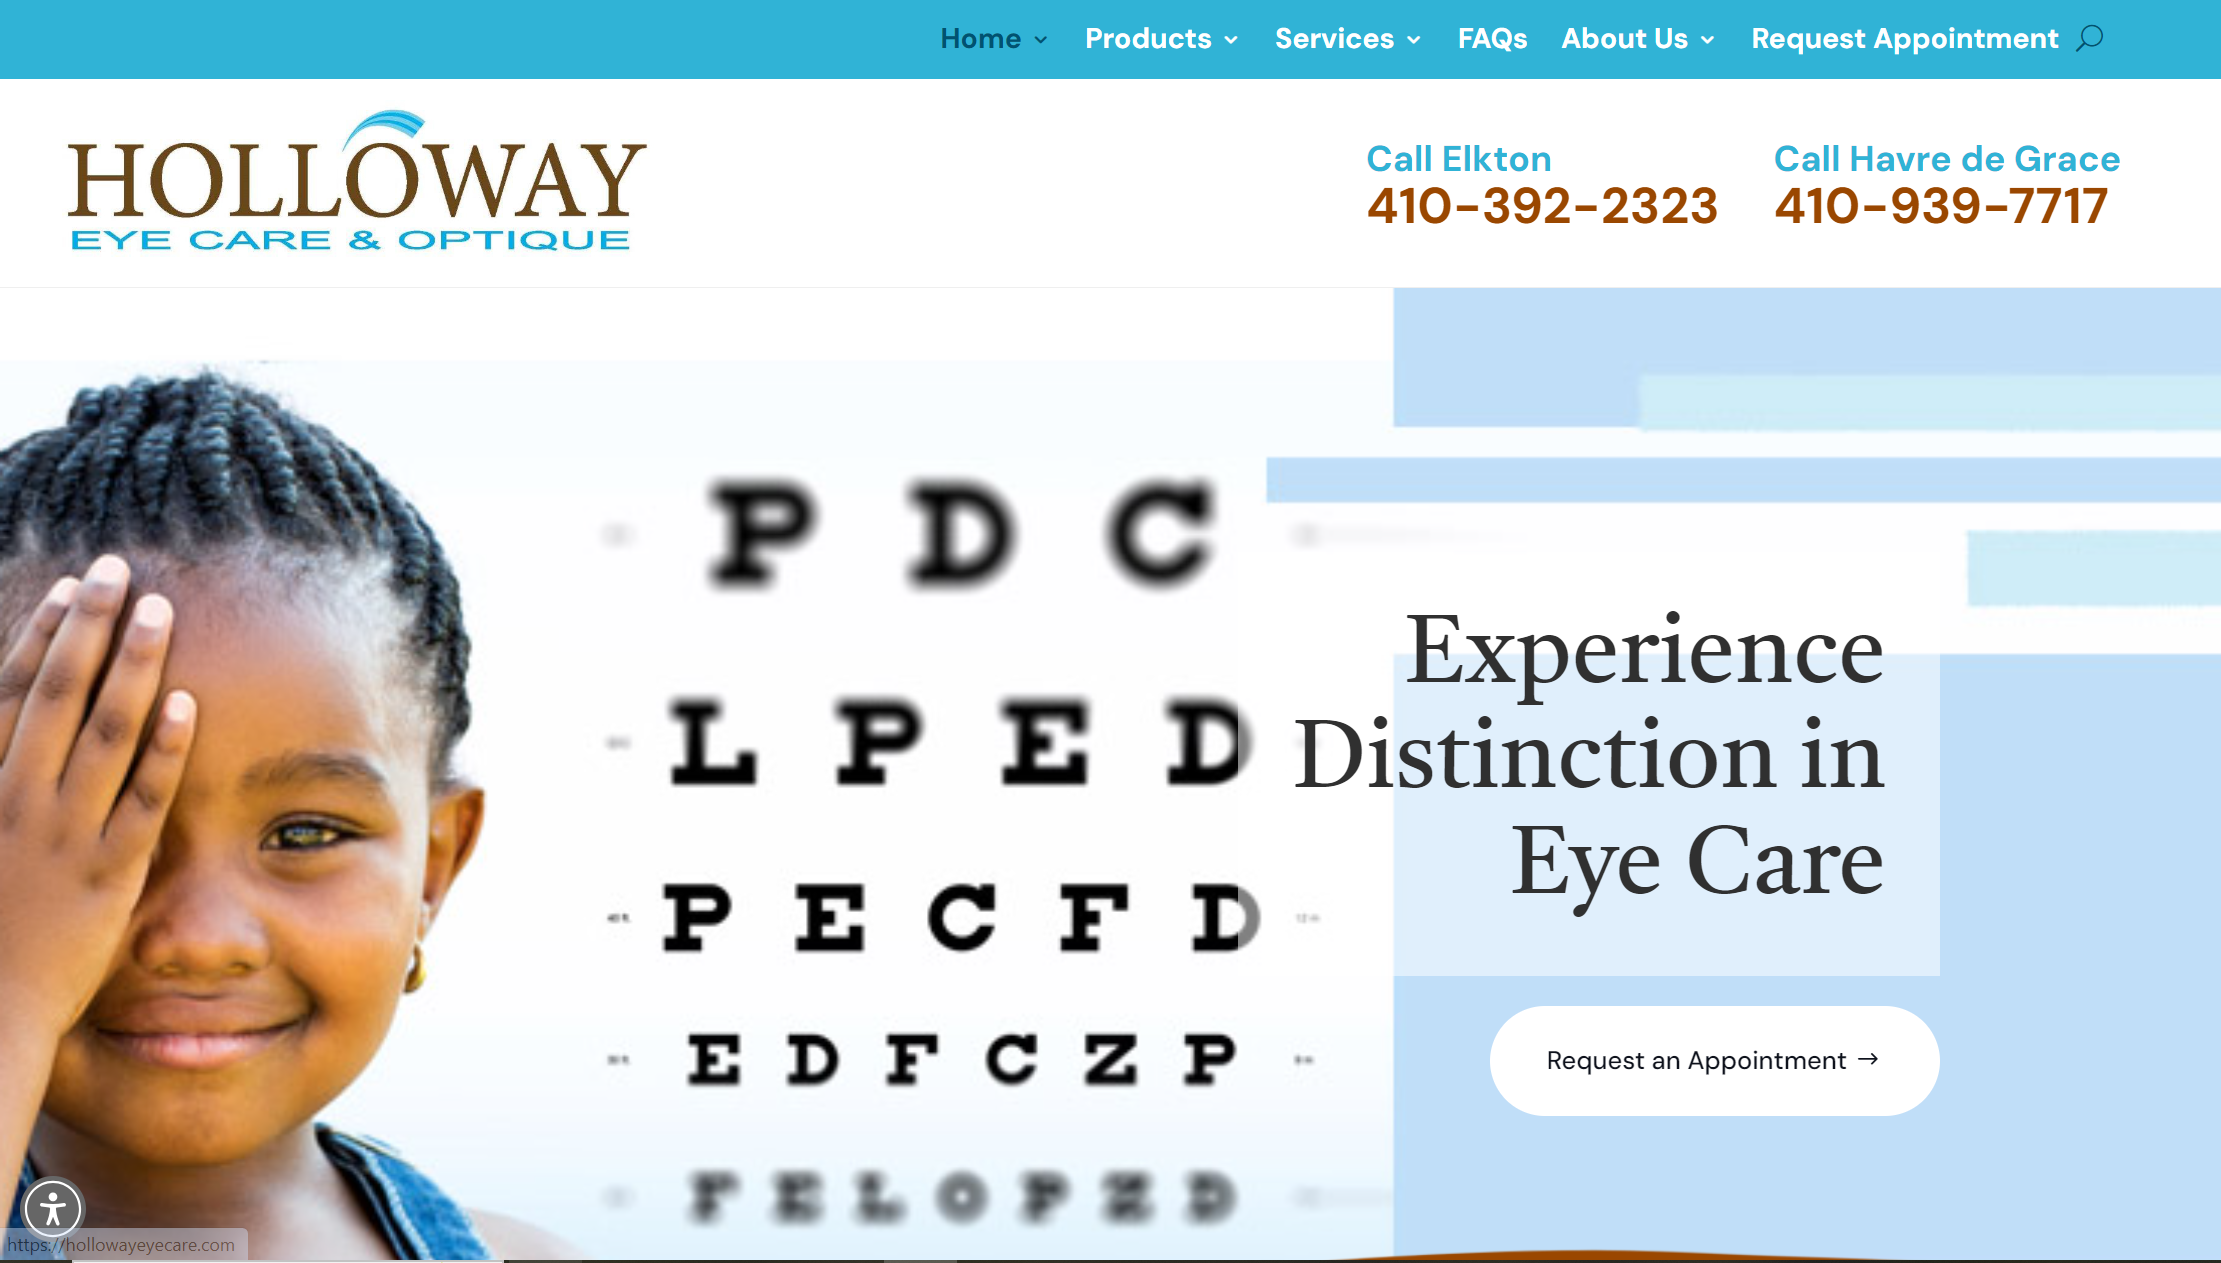 Holloway Eye Care